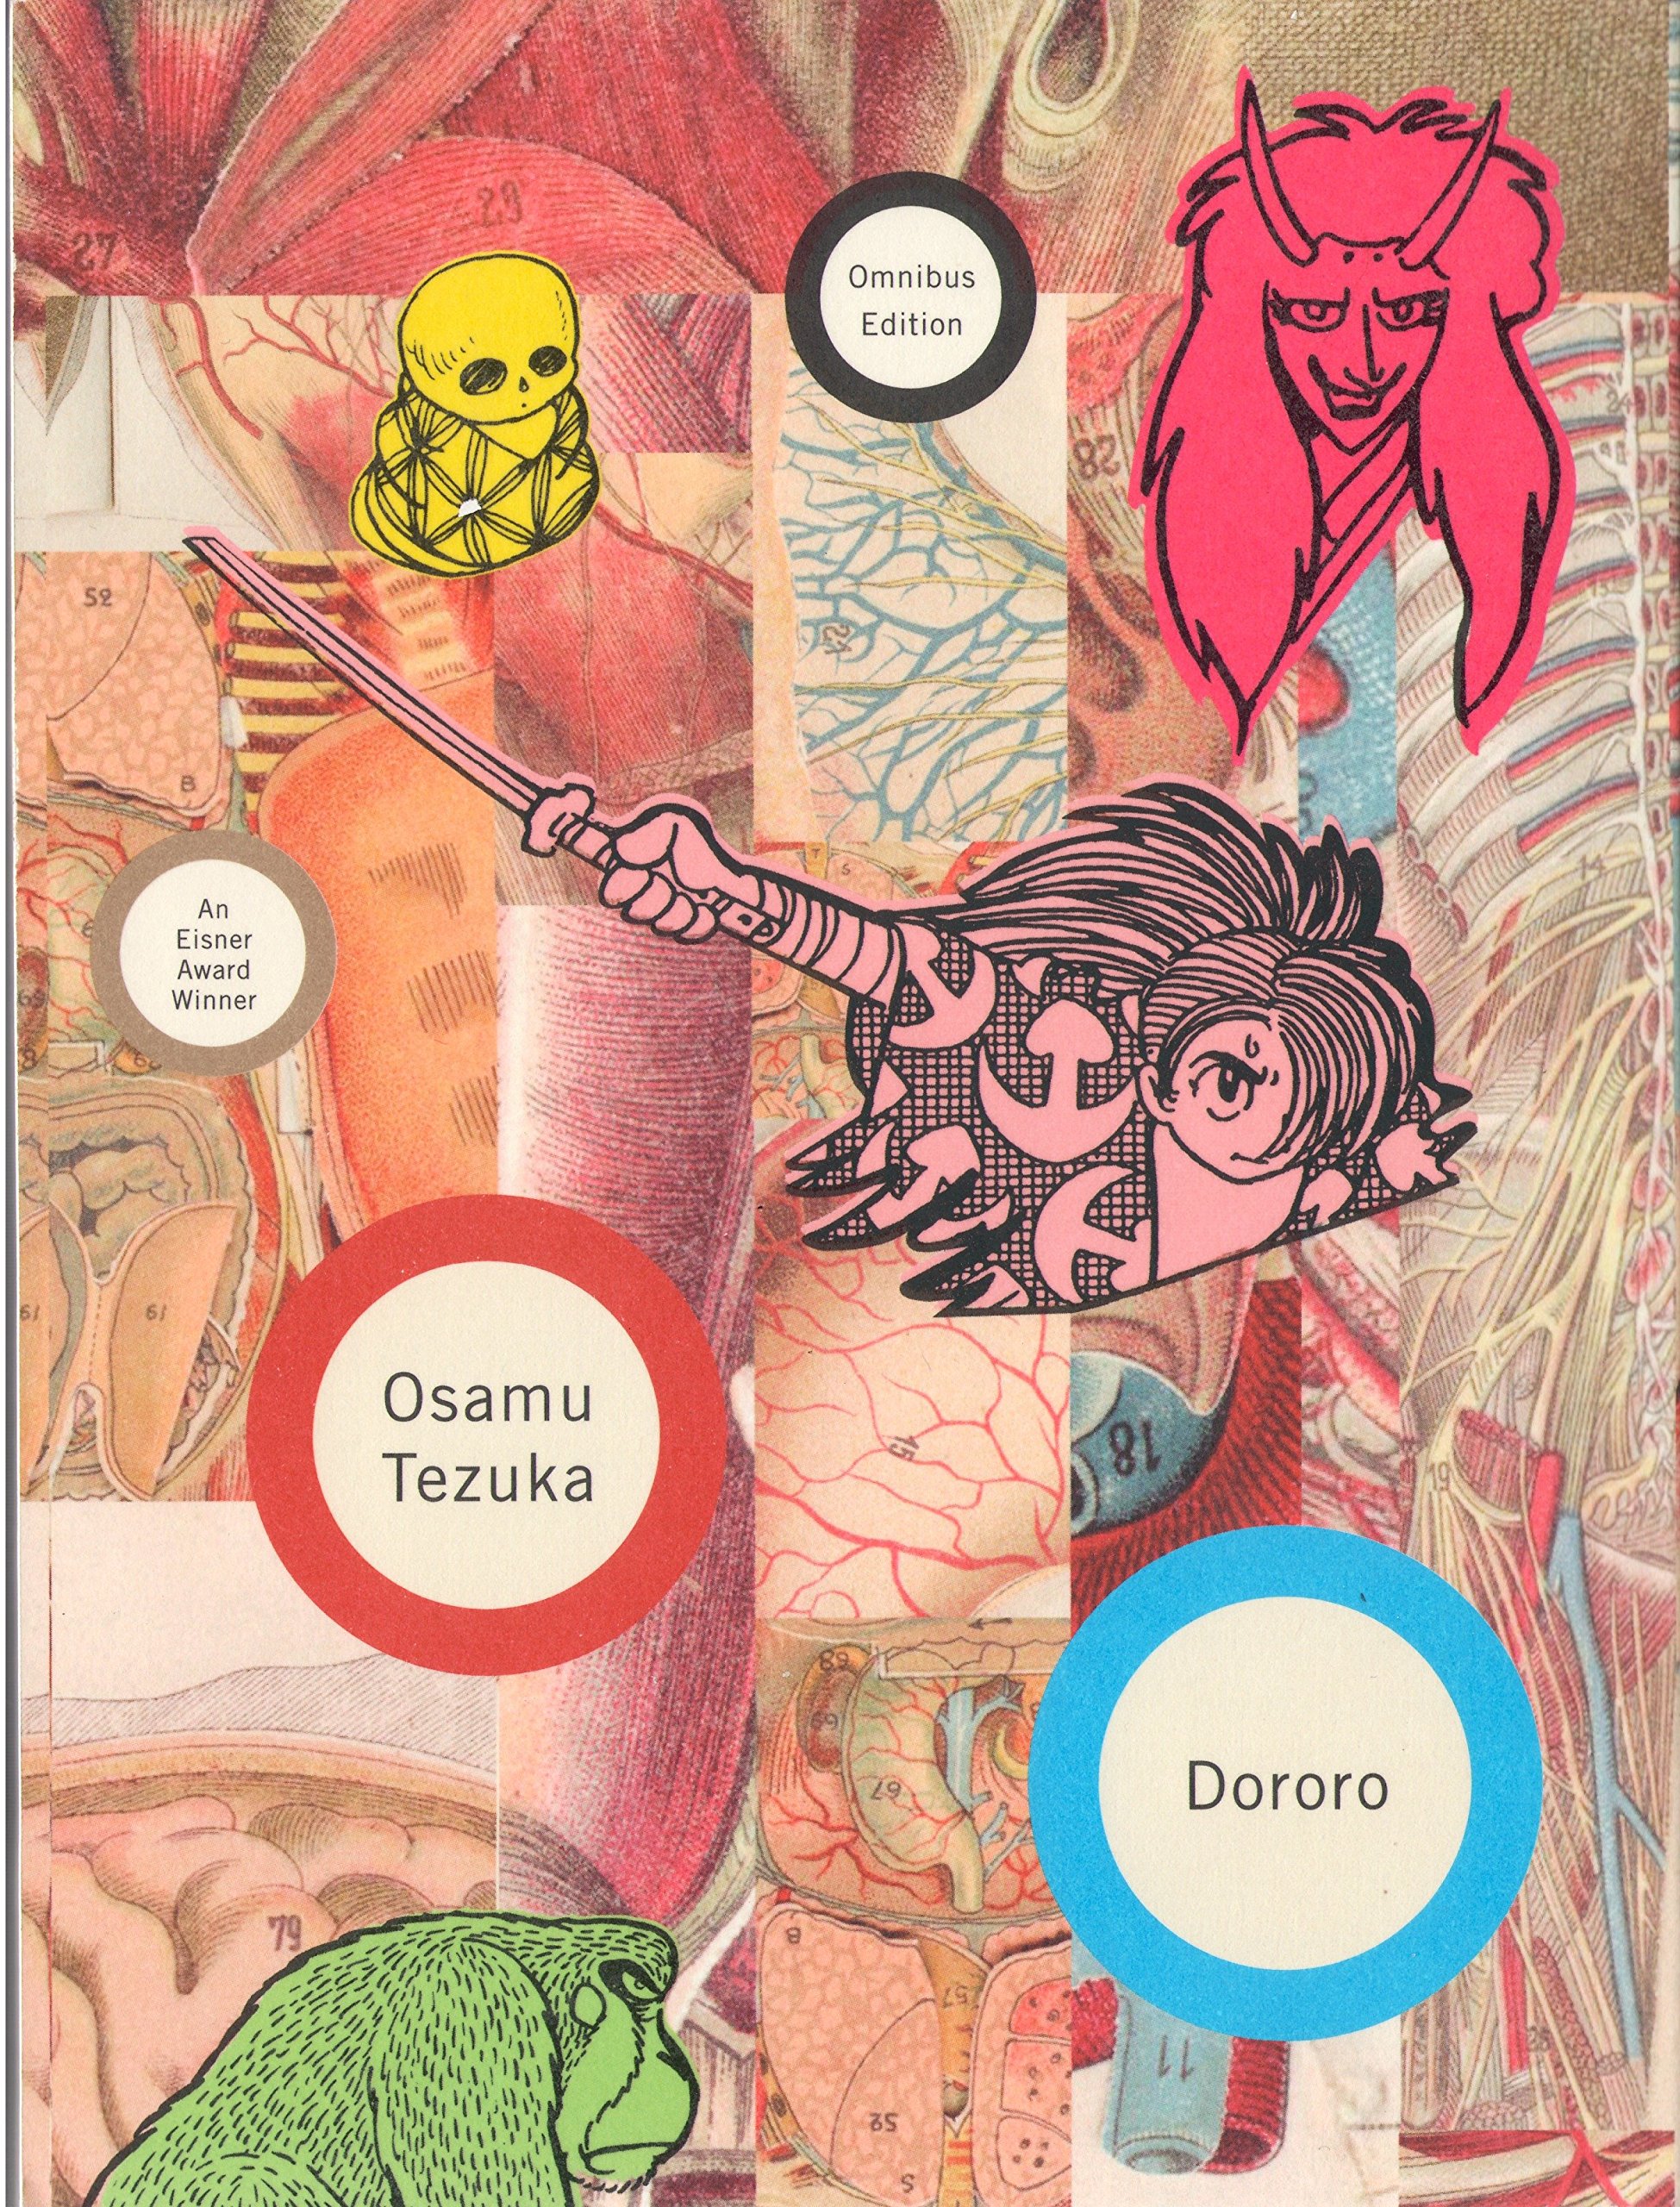 Dororo- Omnibus Edition by Osamu Tezuka